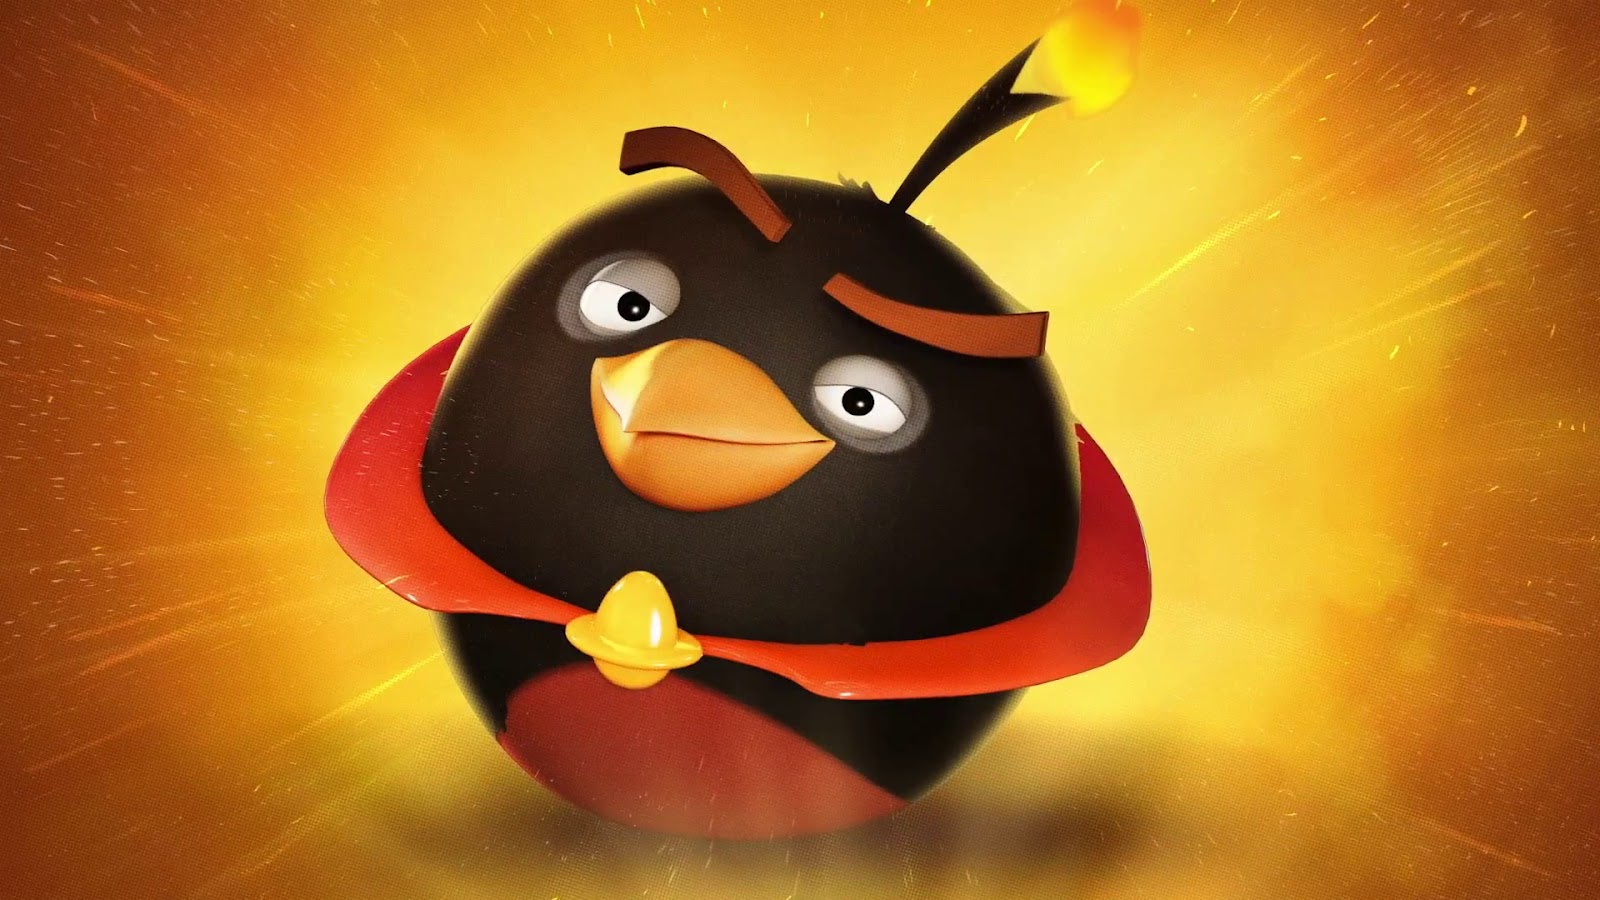 Http - //3 - Bp - Blogspot - Com/ Rpa0fevfn 8/t3v7h0 - Angry Birds Space Bomb - HD Wallpaper 